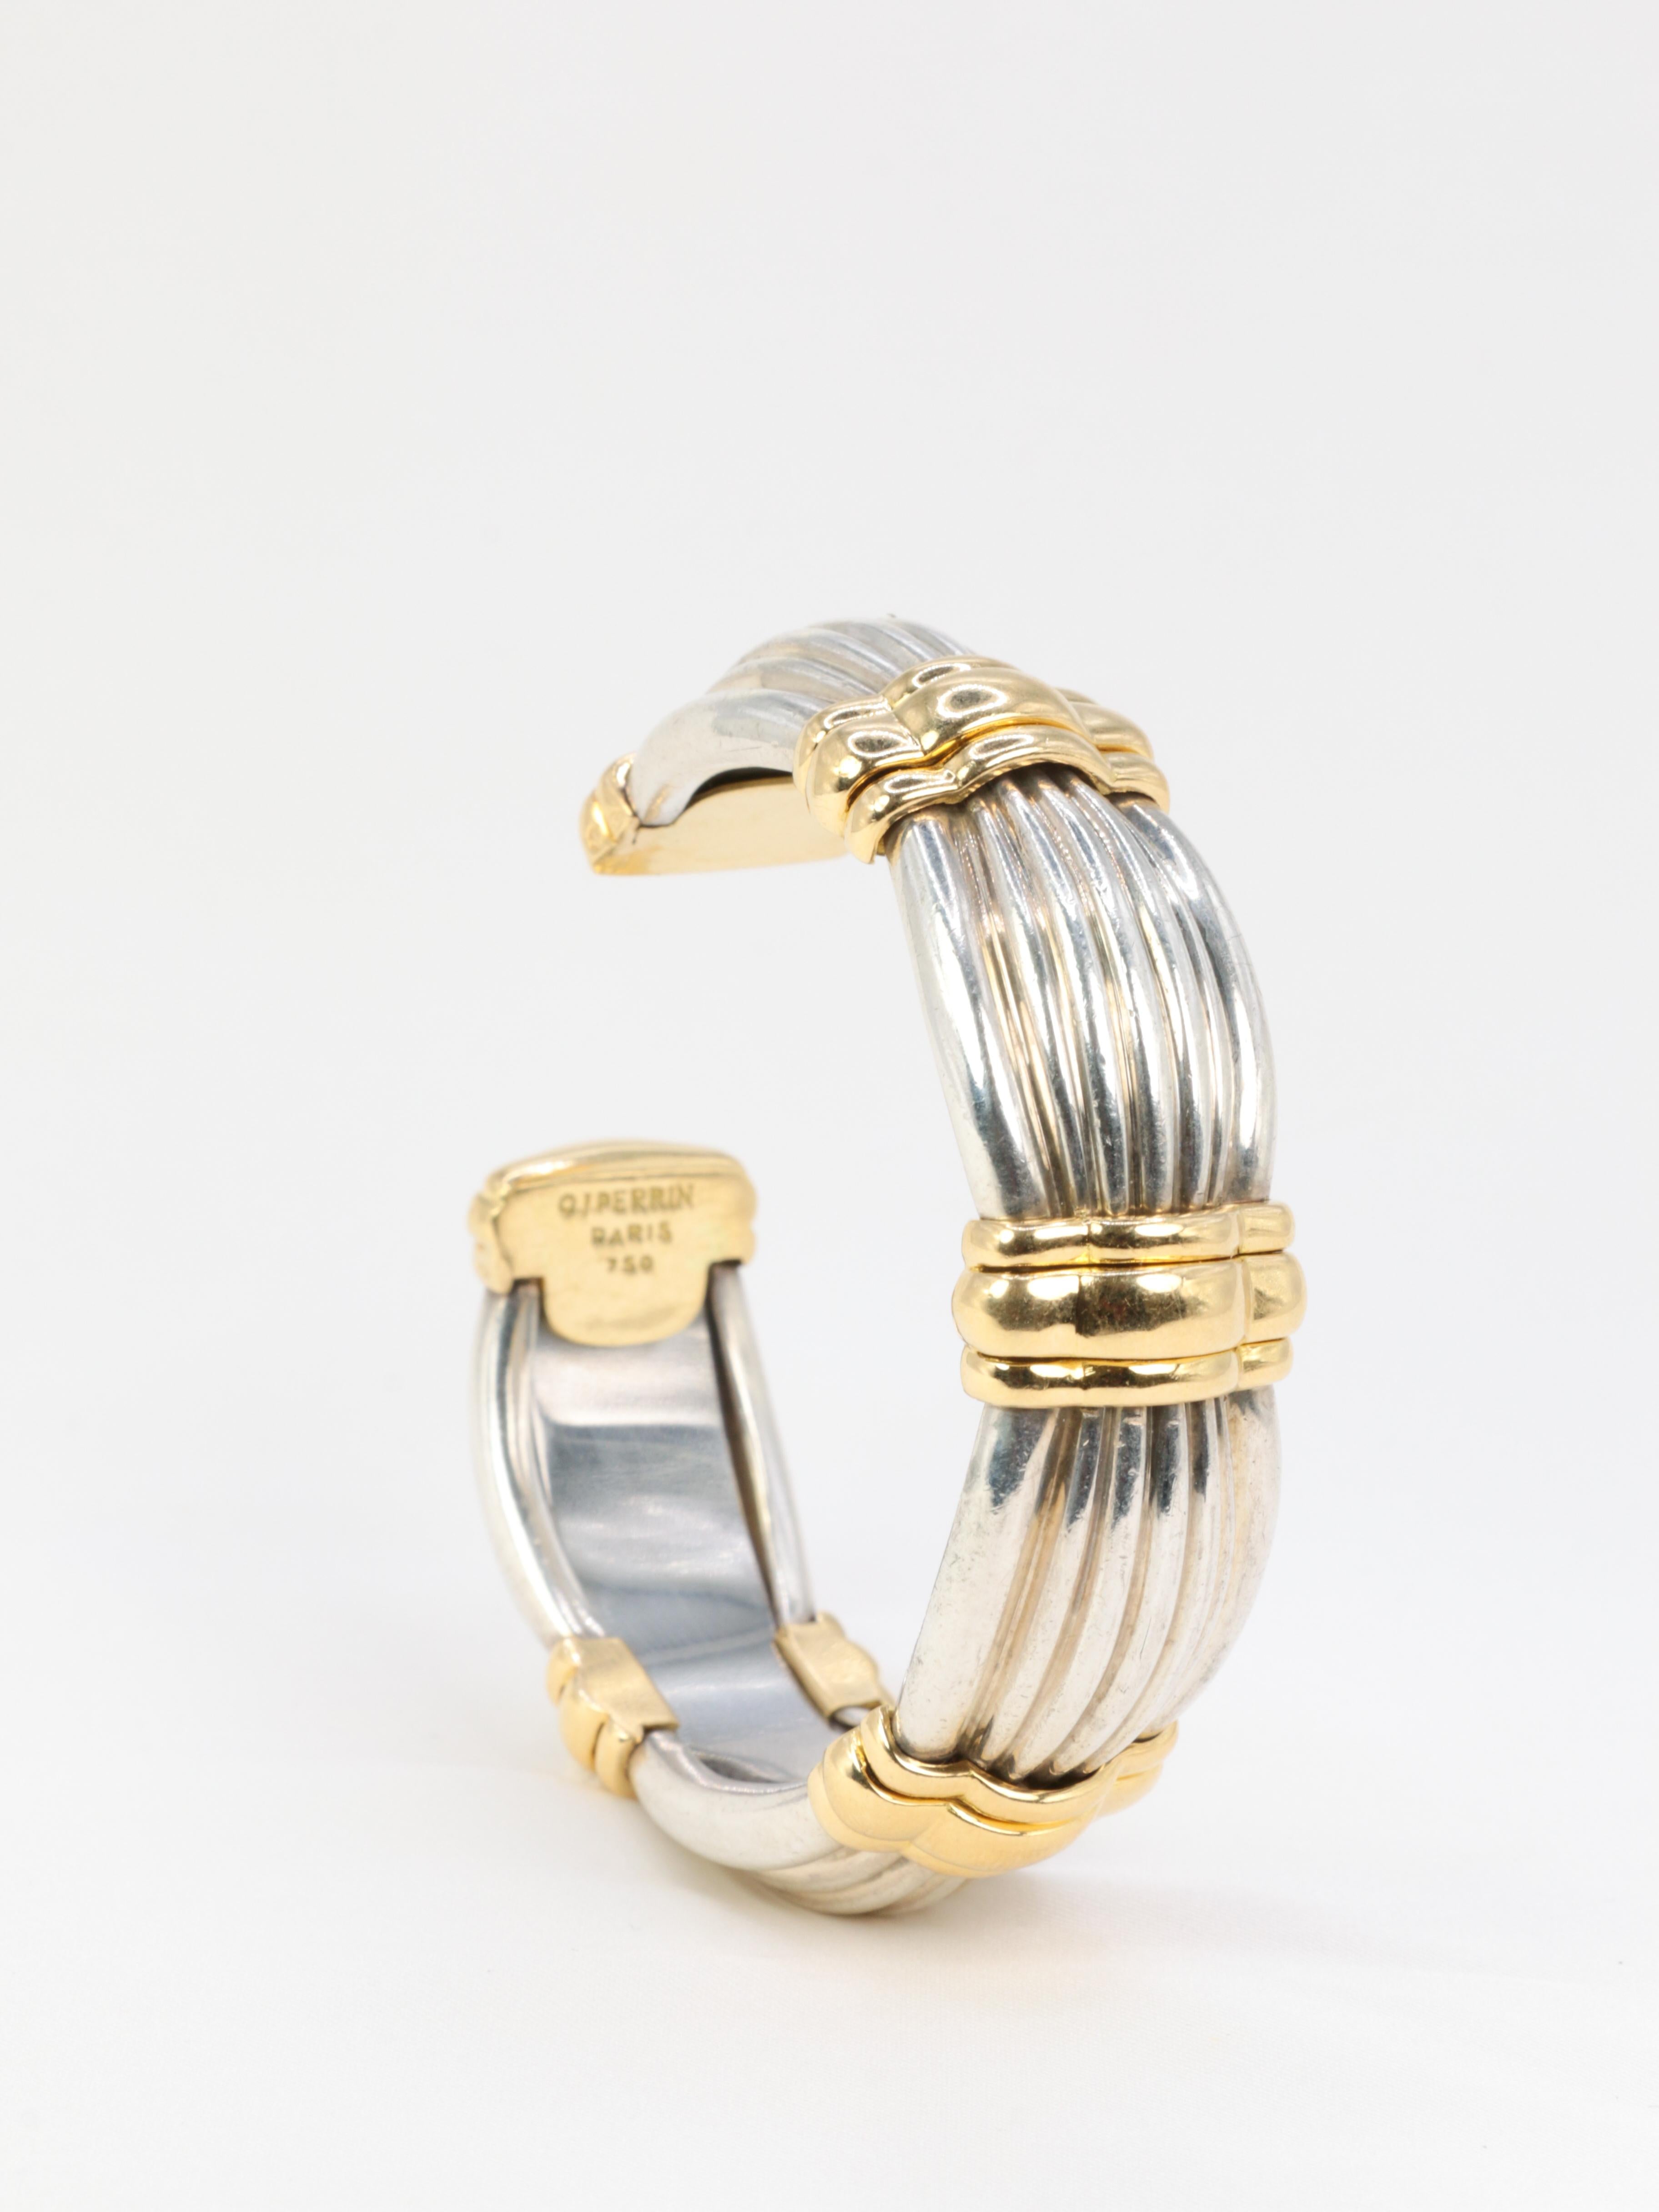 O.J. Perrin Semi-Rigid Bracelet in Gold and Silver 2